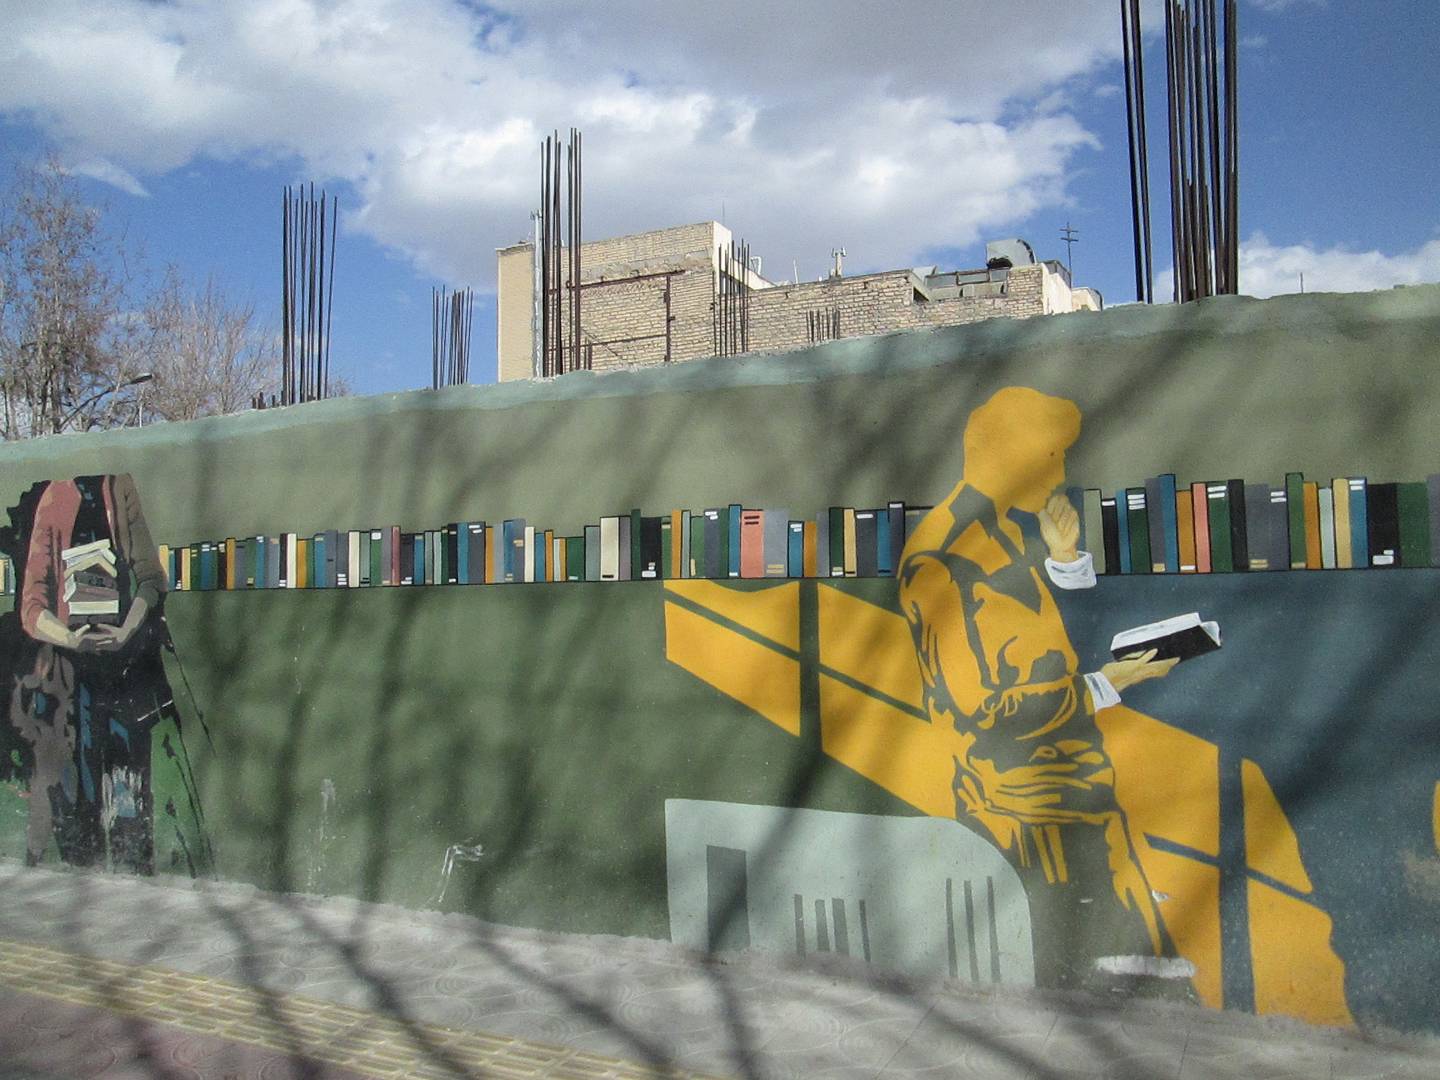 Иран читающий. Граффити в центре Шираза, Иран